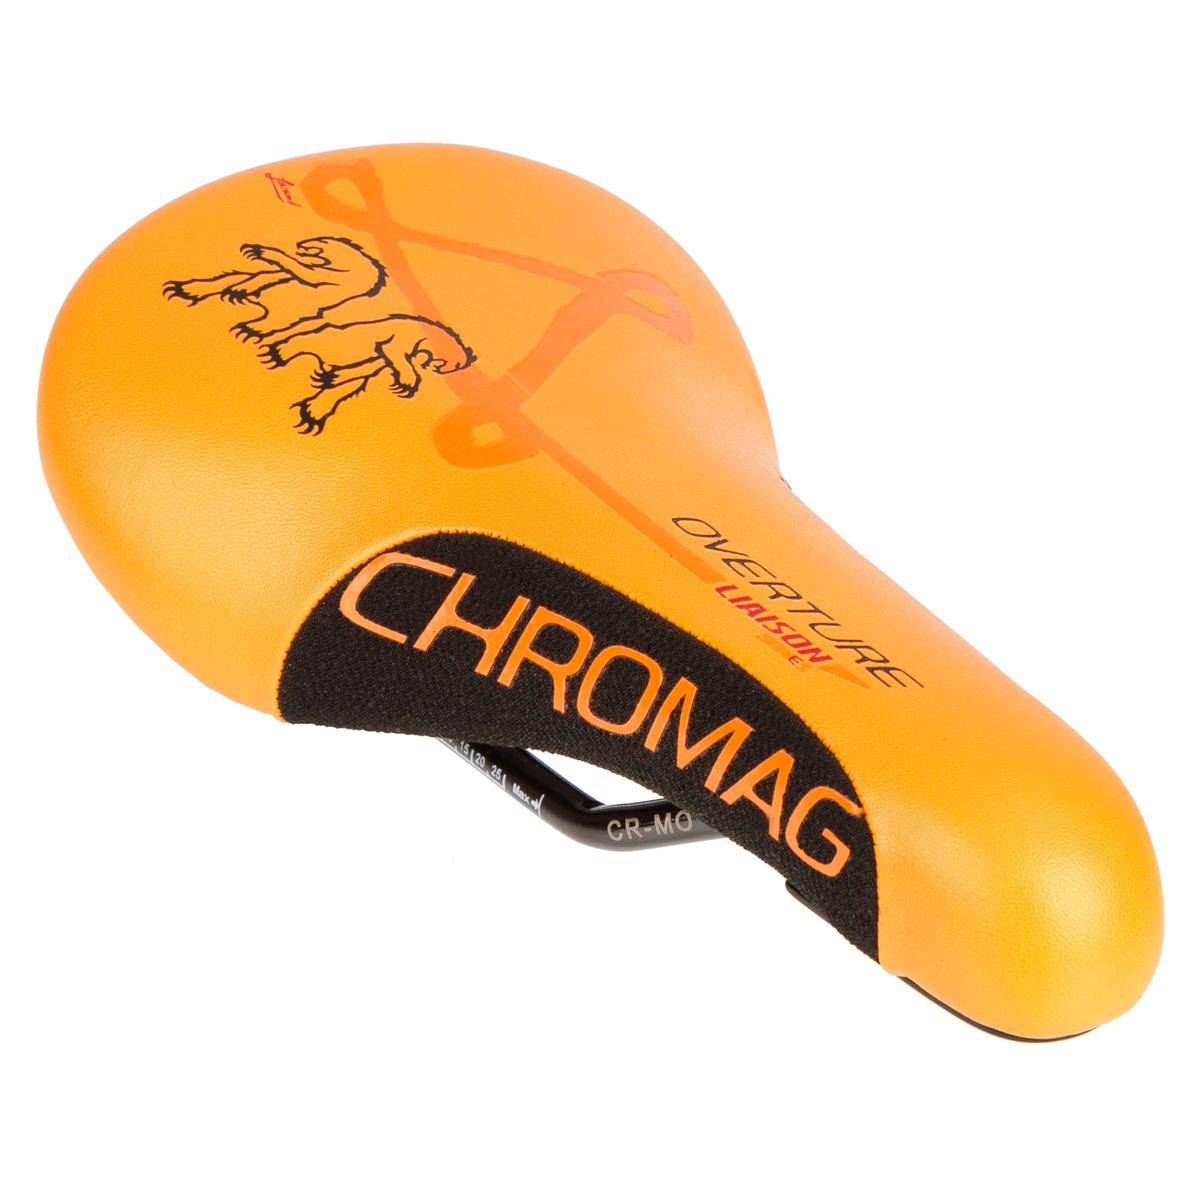 Chromag Sattel Overture 2018 243 x 136 mm, Orange